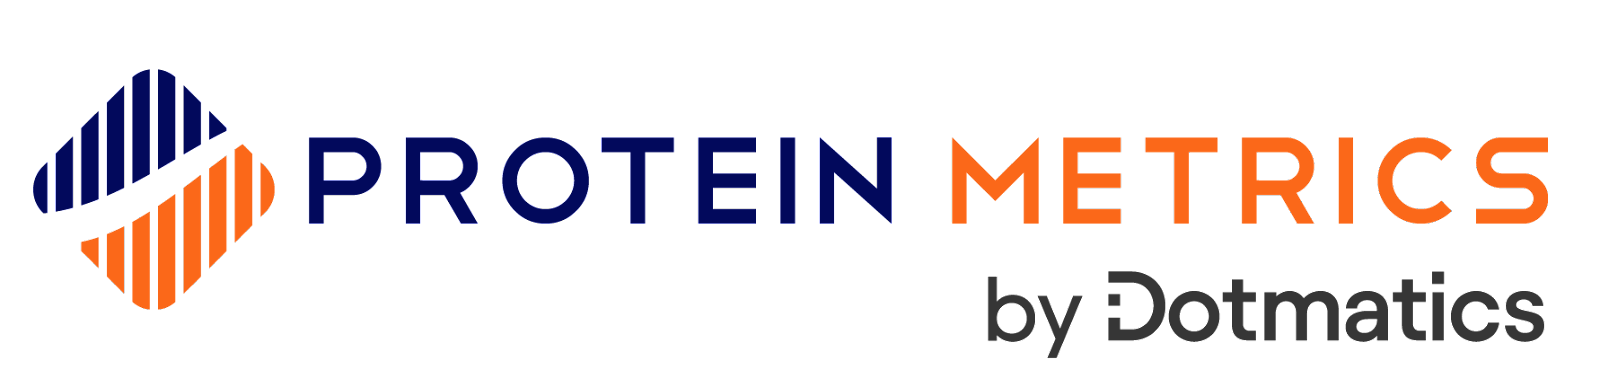 Logo with text 'Protein Metrics by Dotmatics'